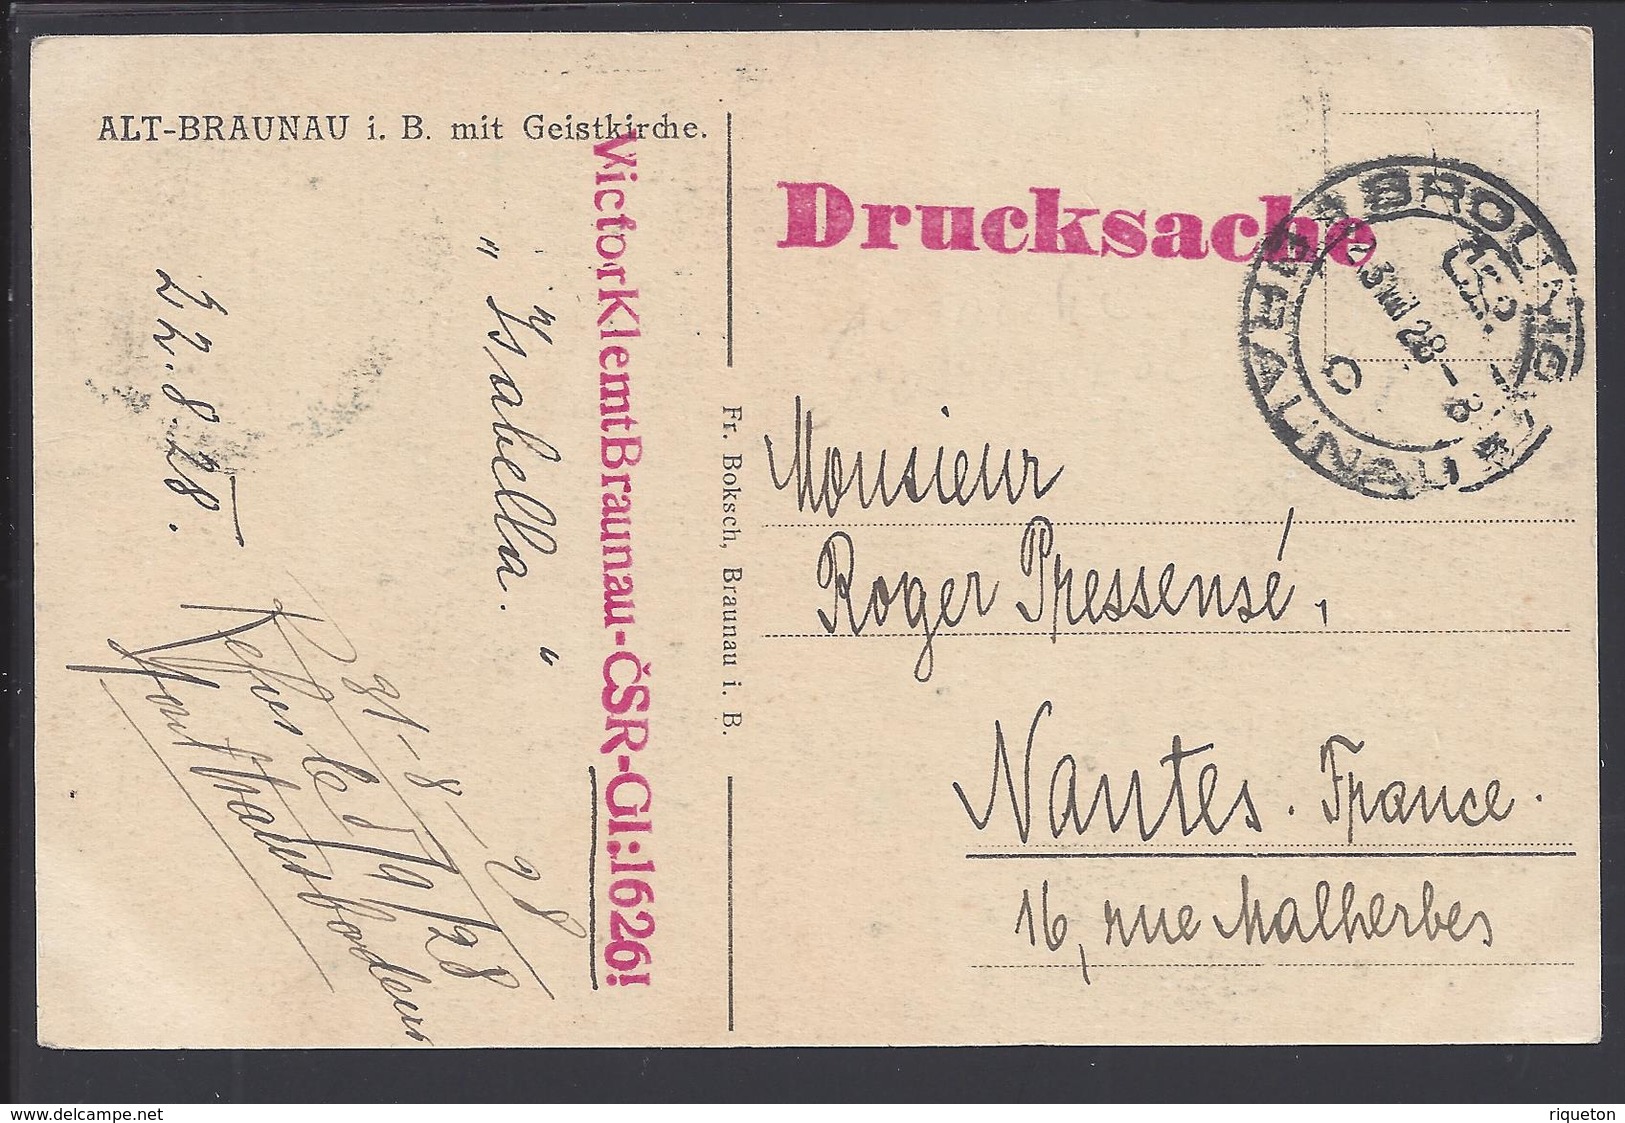 AUTRICHE - Correspondance De Braunau Du 22-8-1928 Pour Nantes (FR) Sur CPA "Alt-Braunau I. B Mit Geistkirche" B/TB - - Briefe U. Dokumente